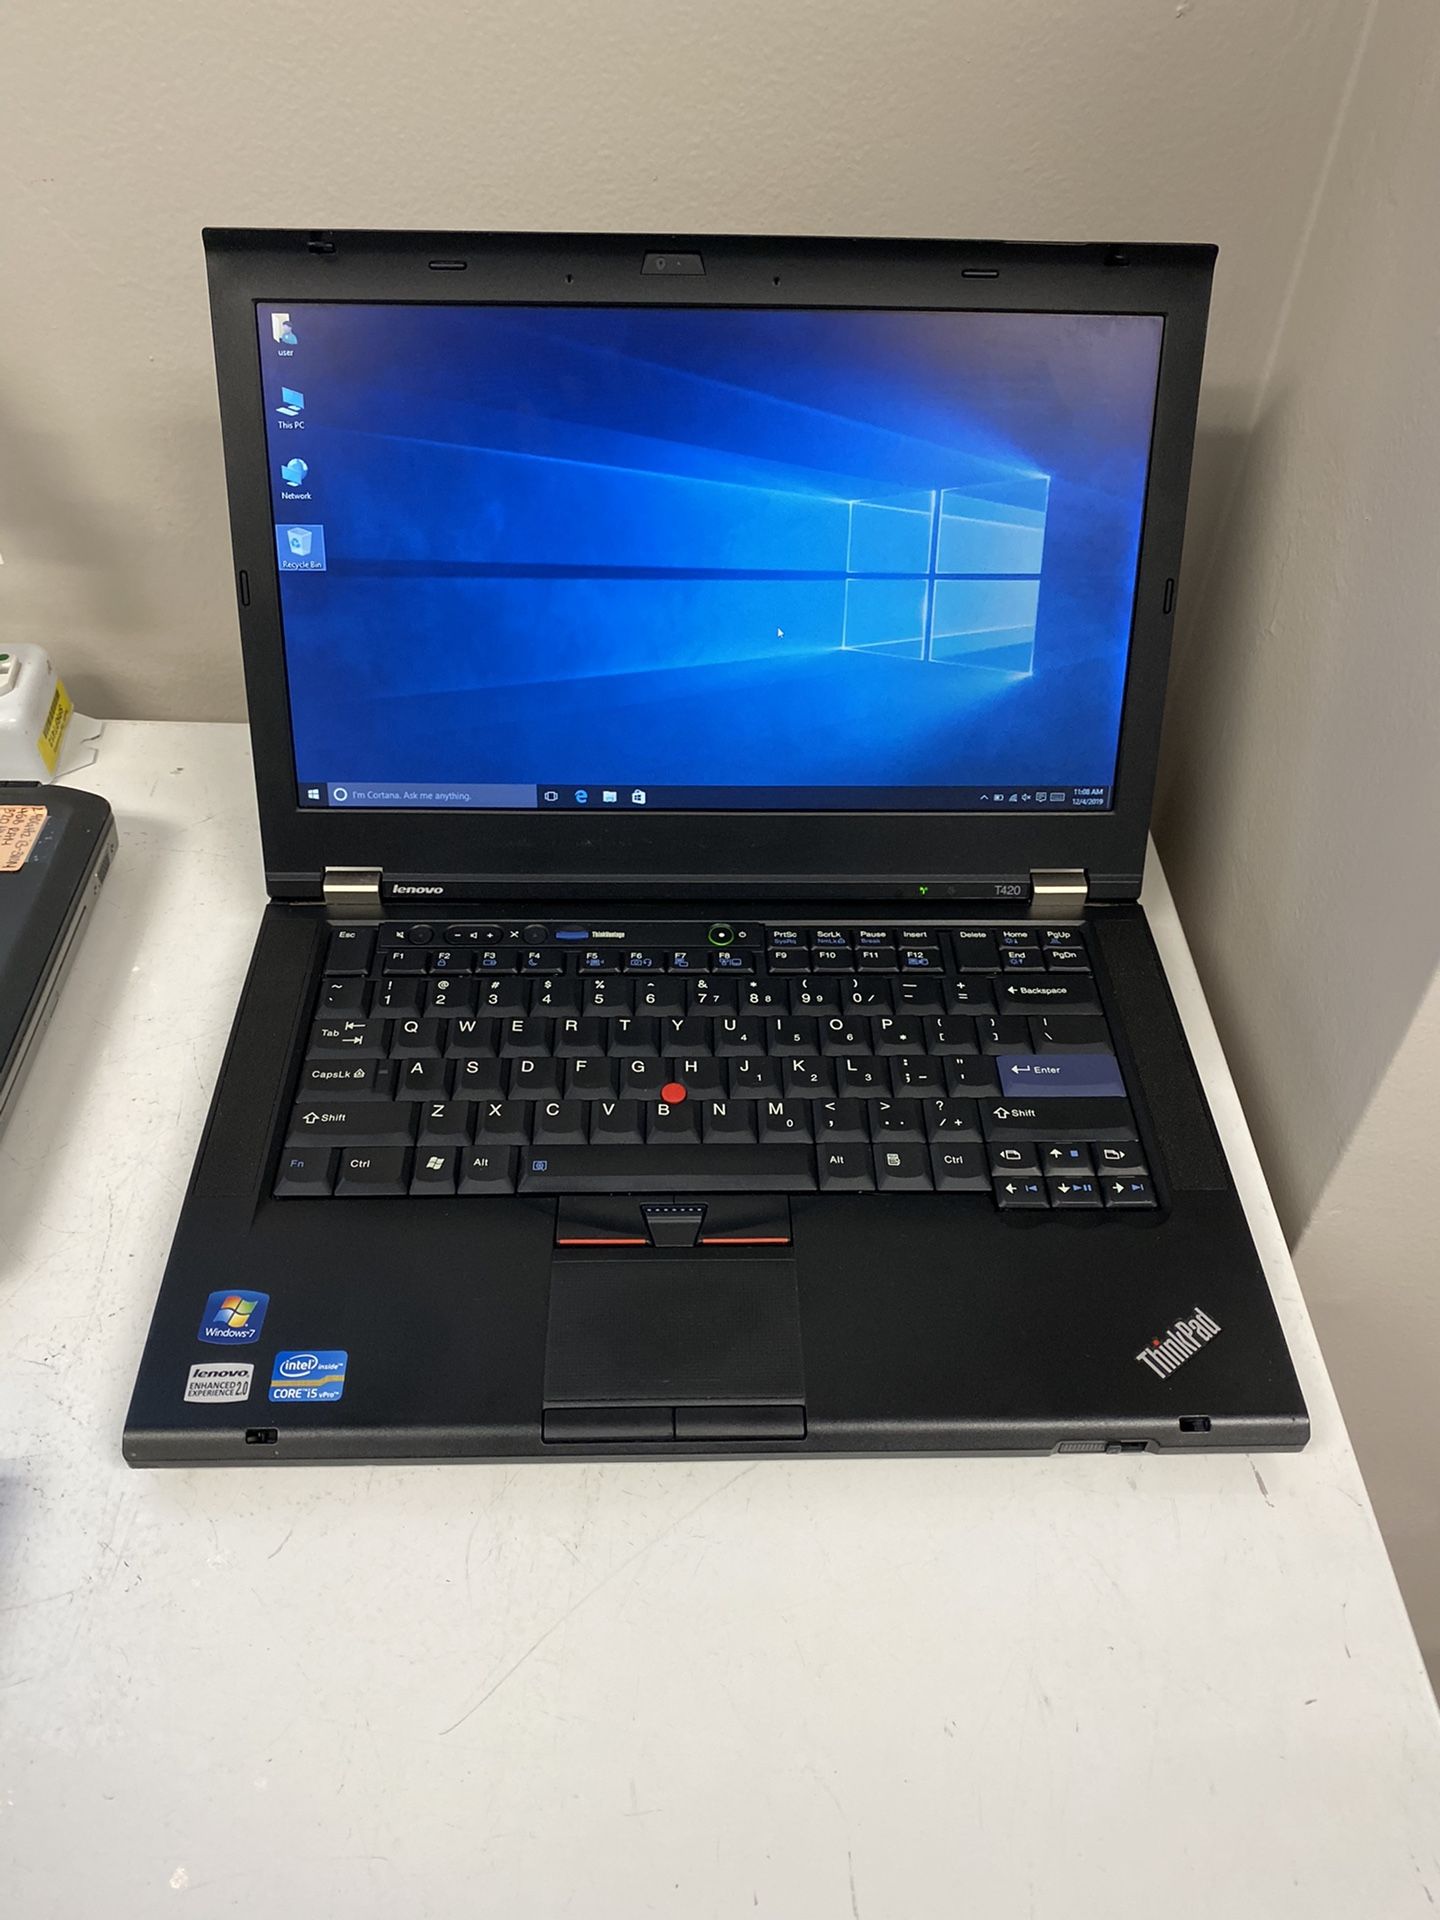 Lenovo ThinkPad T420 2.5ghz Core i5 4gb RAM 160gb HD Windows 10 Pro